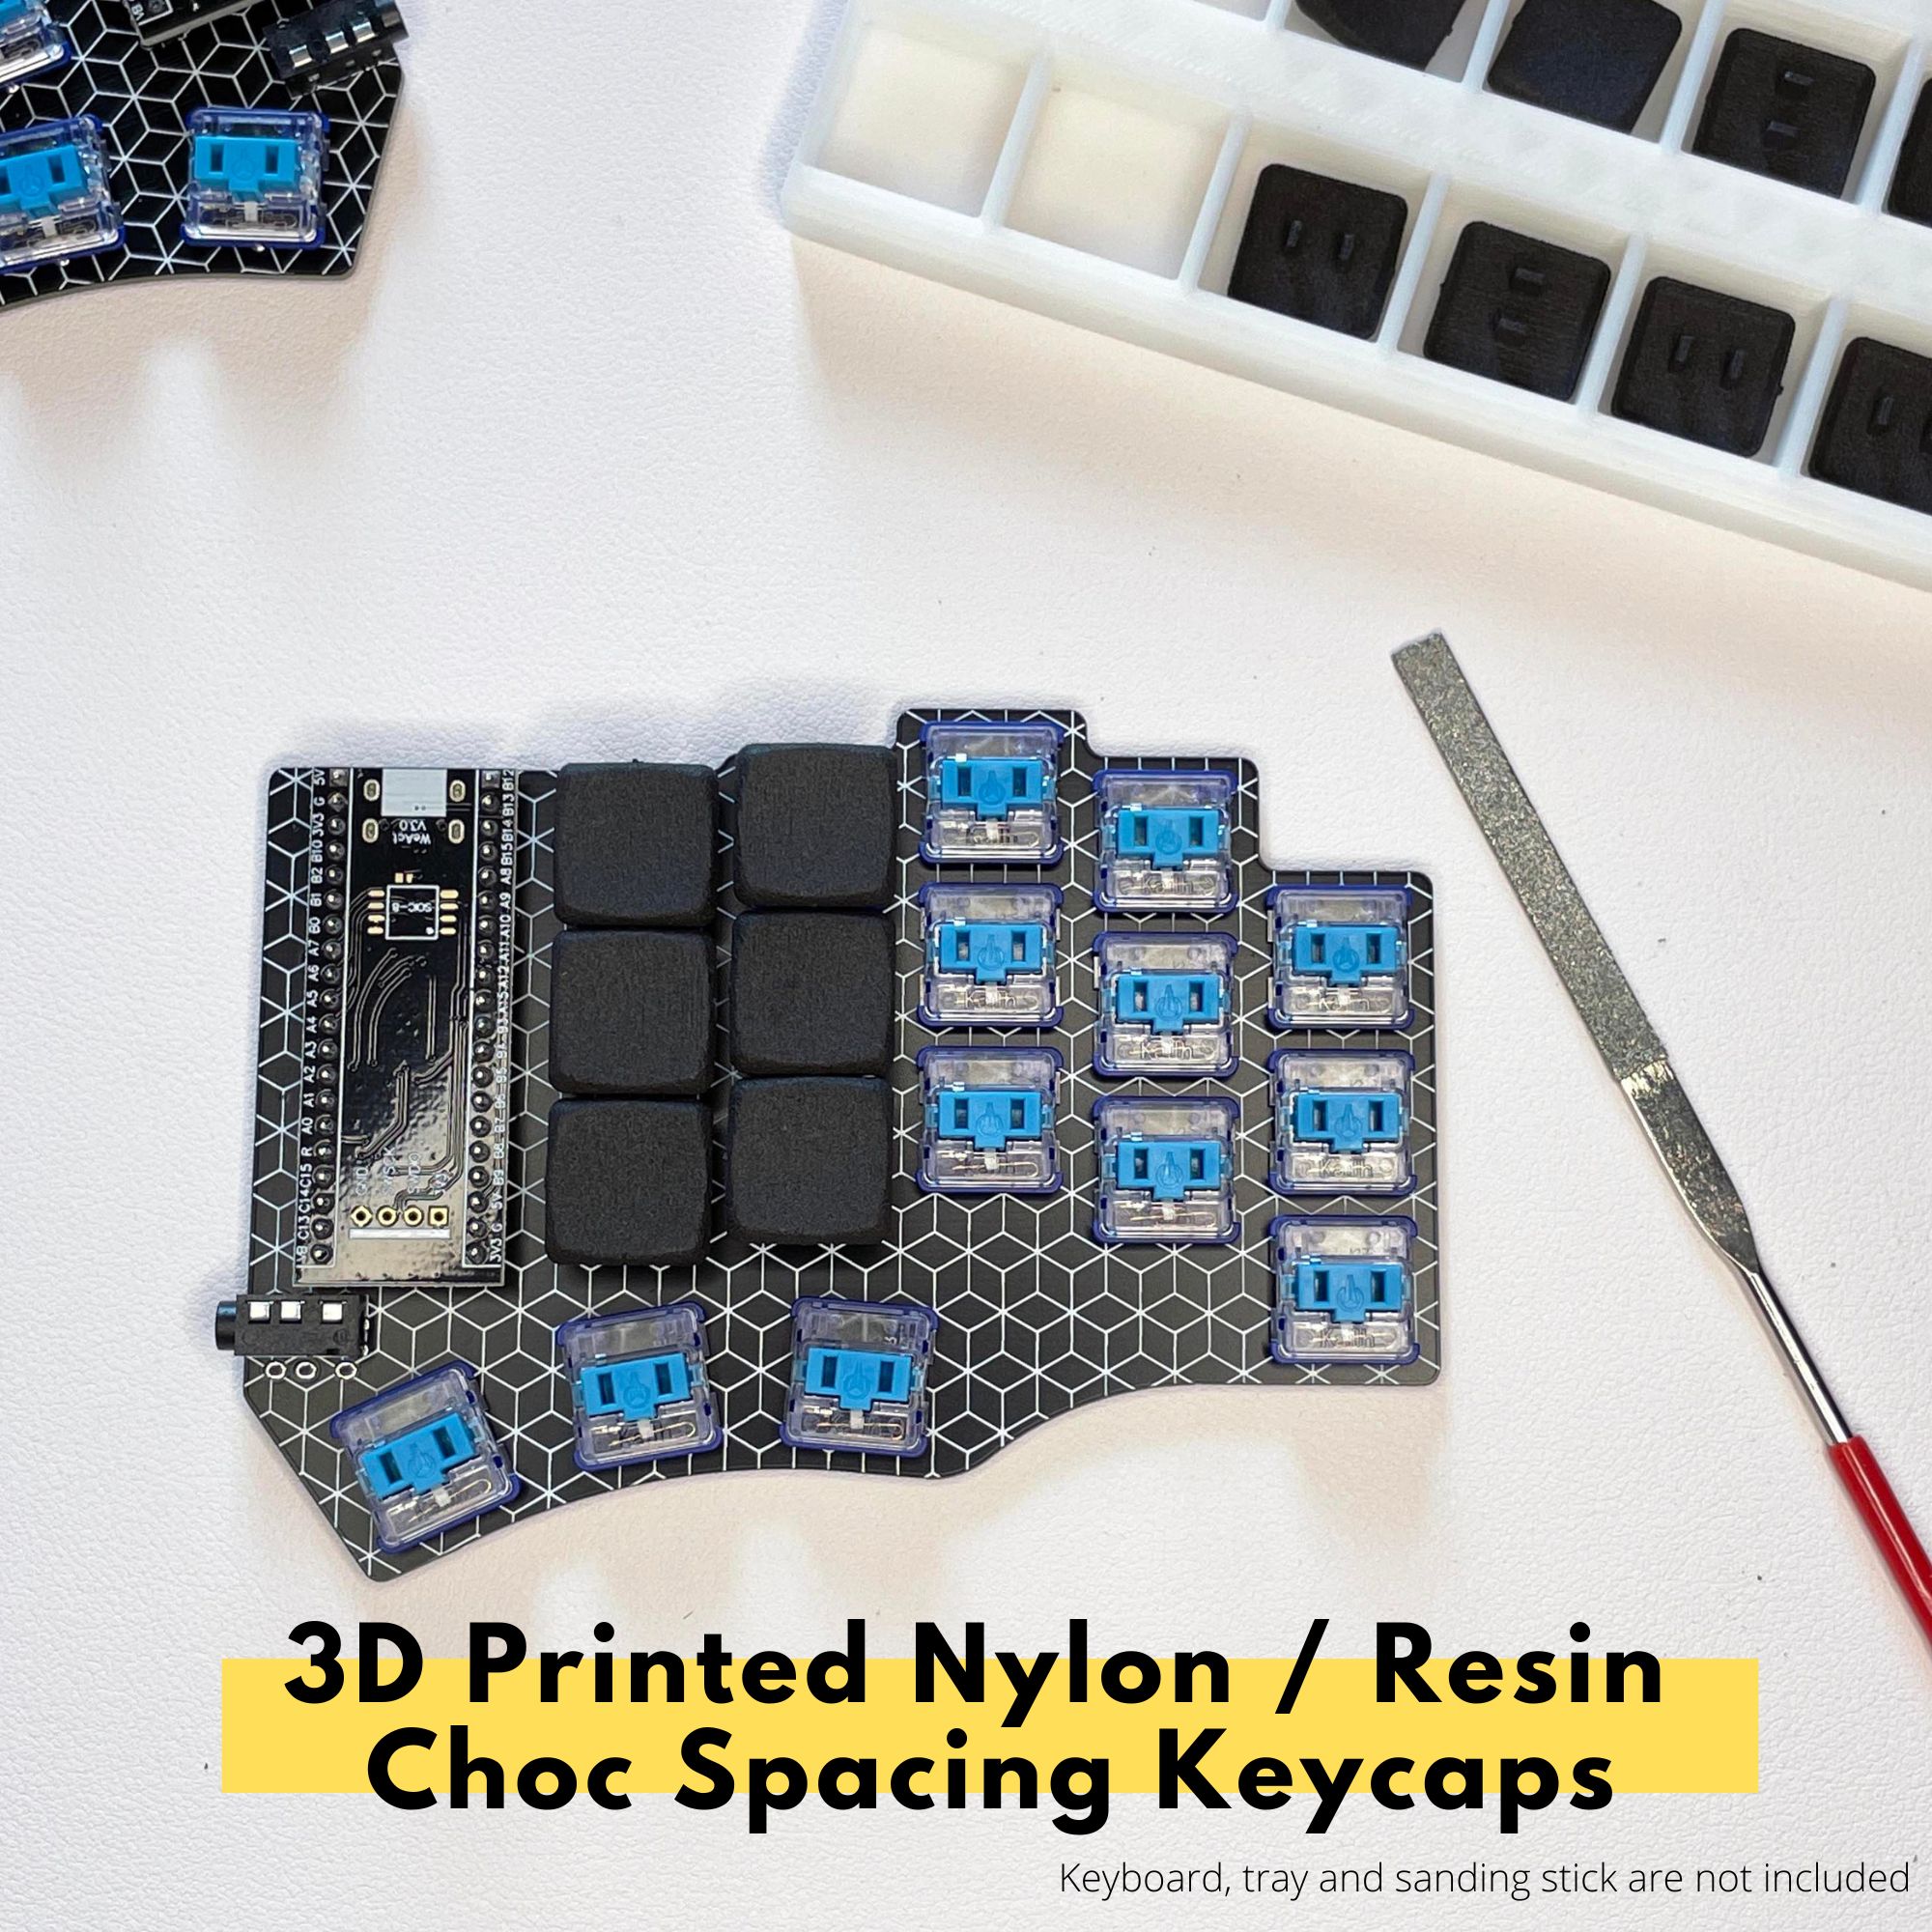 3D printed nylon choc spacing keycaps